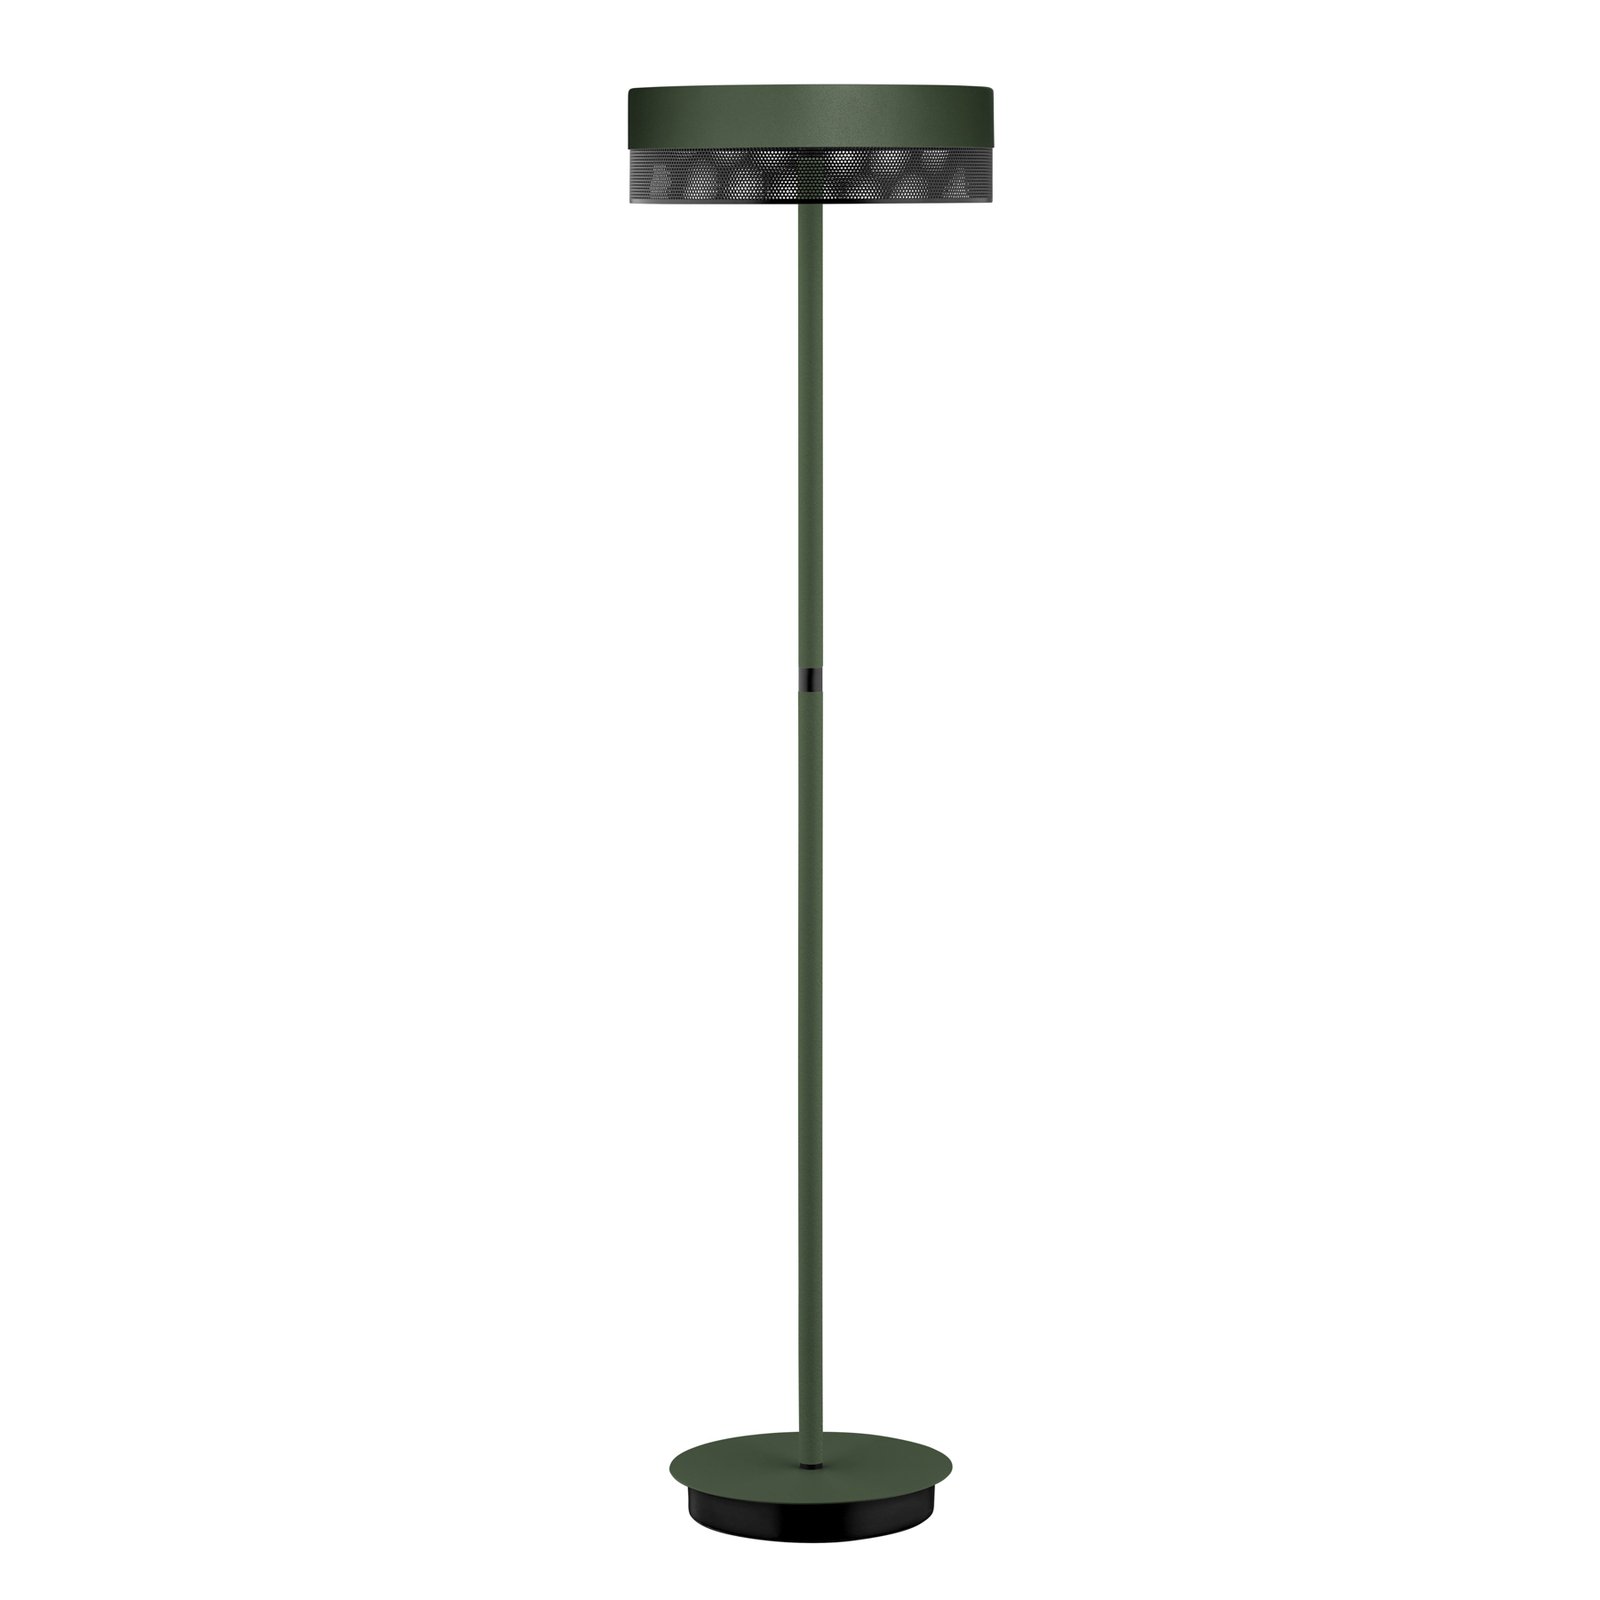 Mesh LED floor lamp with a dimmer, fir green